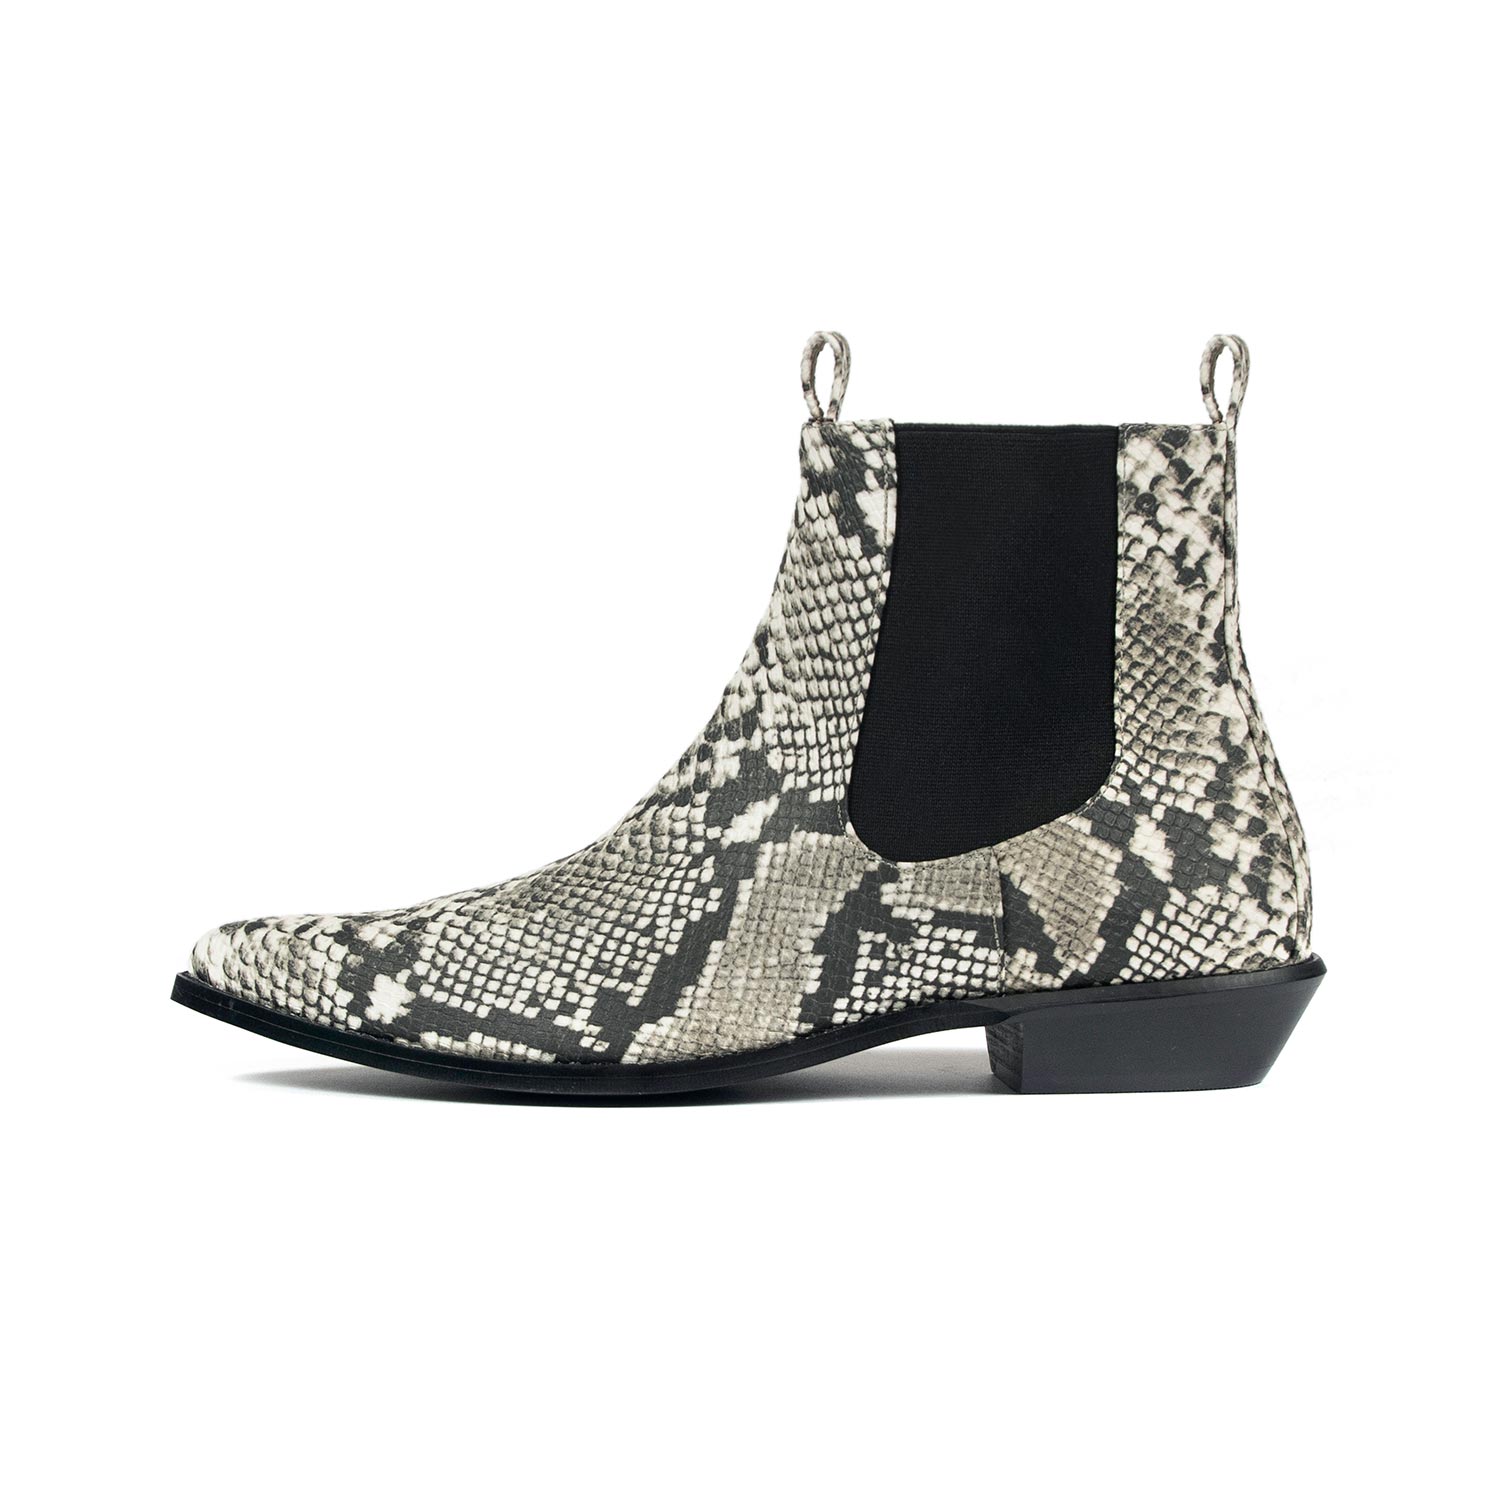 Vegan Addison - Grey Snakeskin Faux Leather Chelsea Boots (Size 7.5, 8 ...